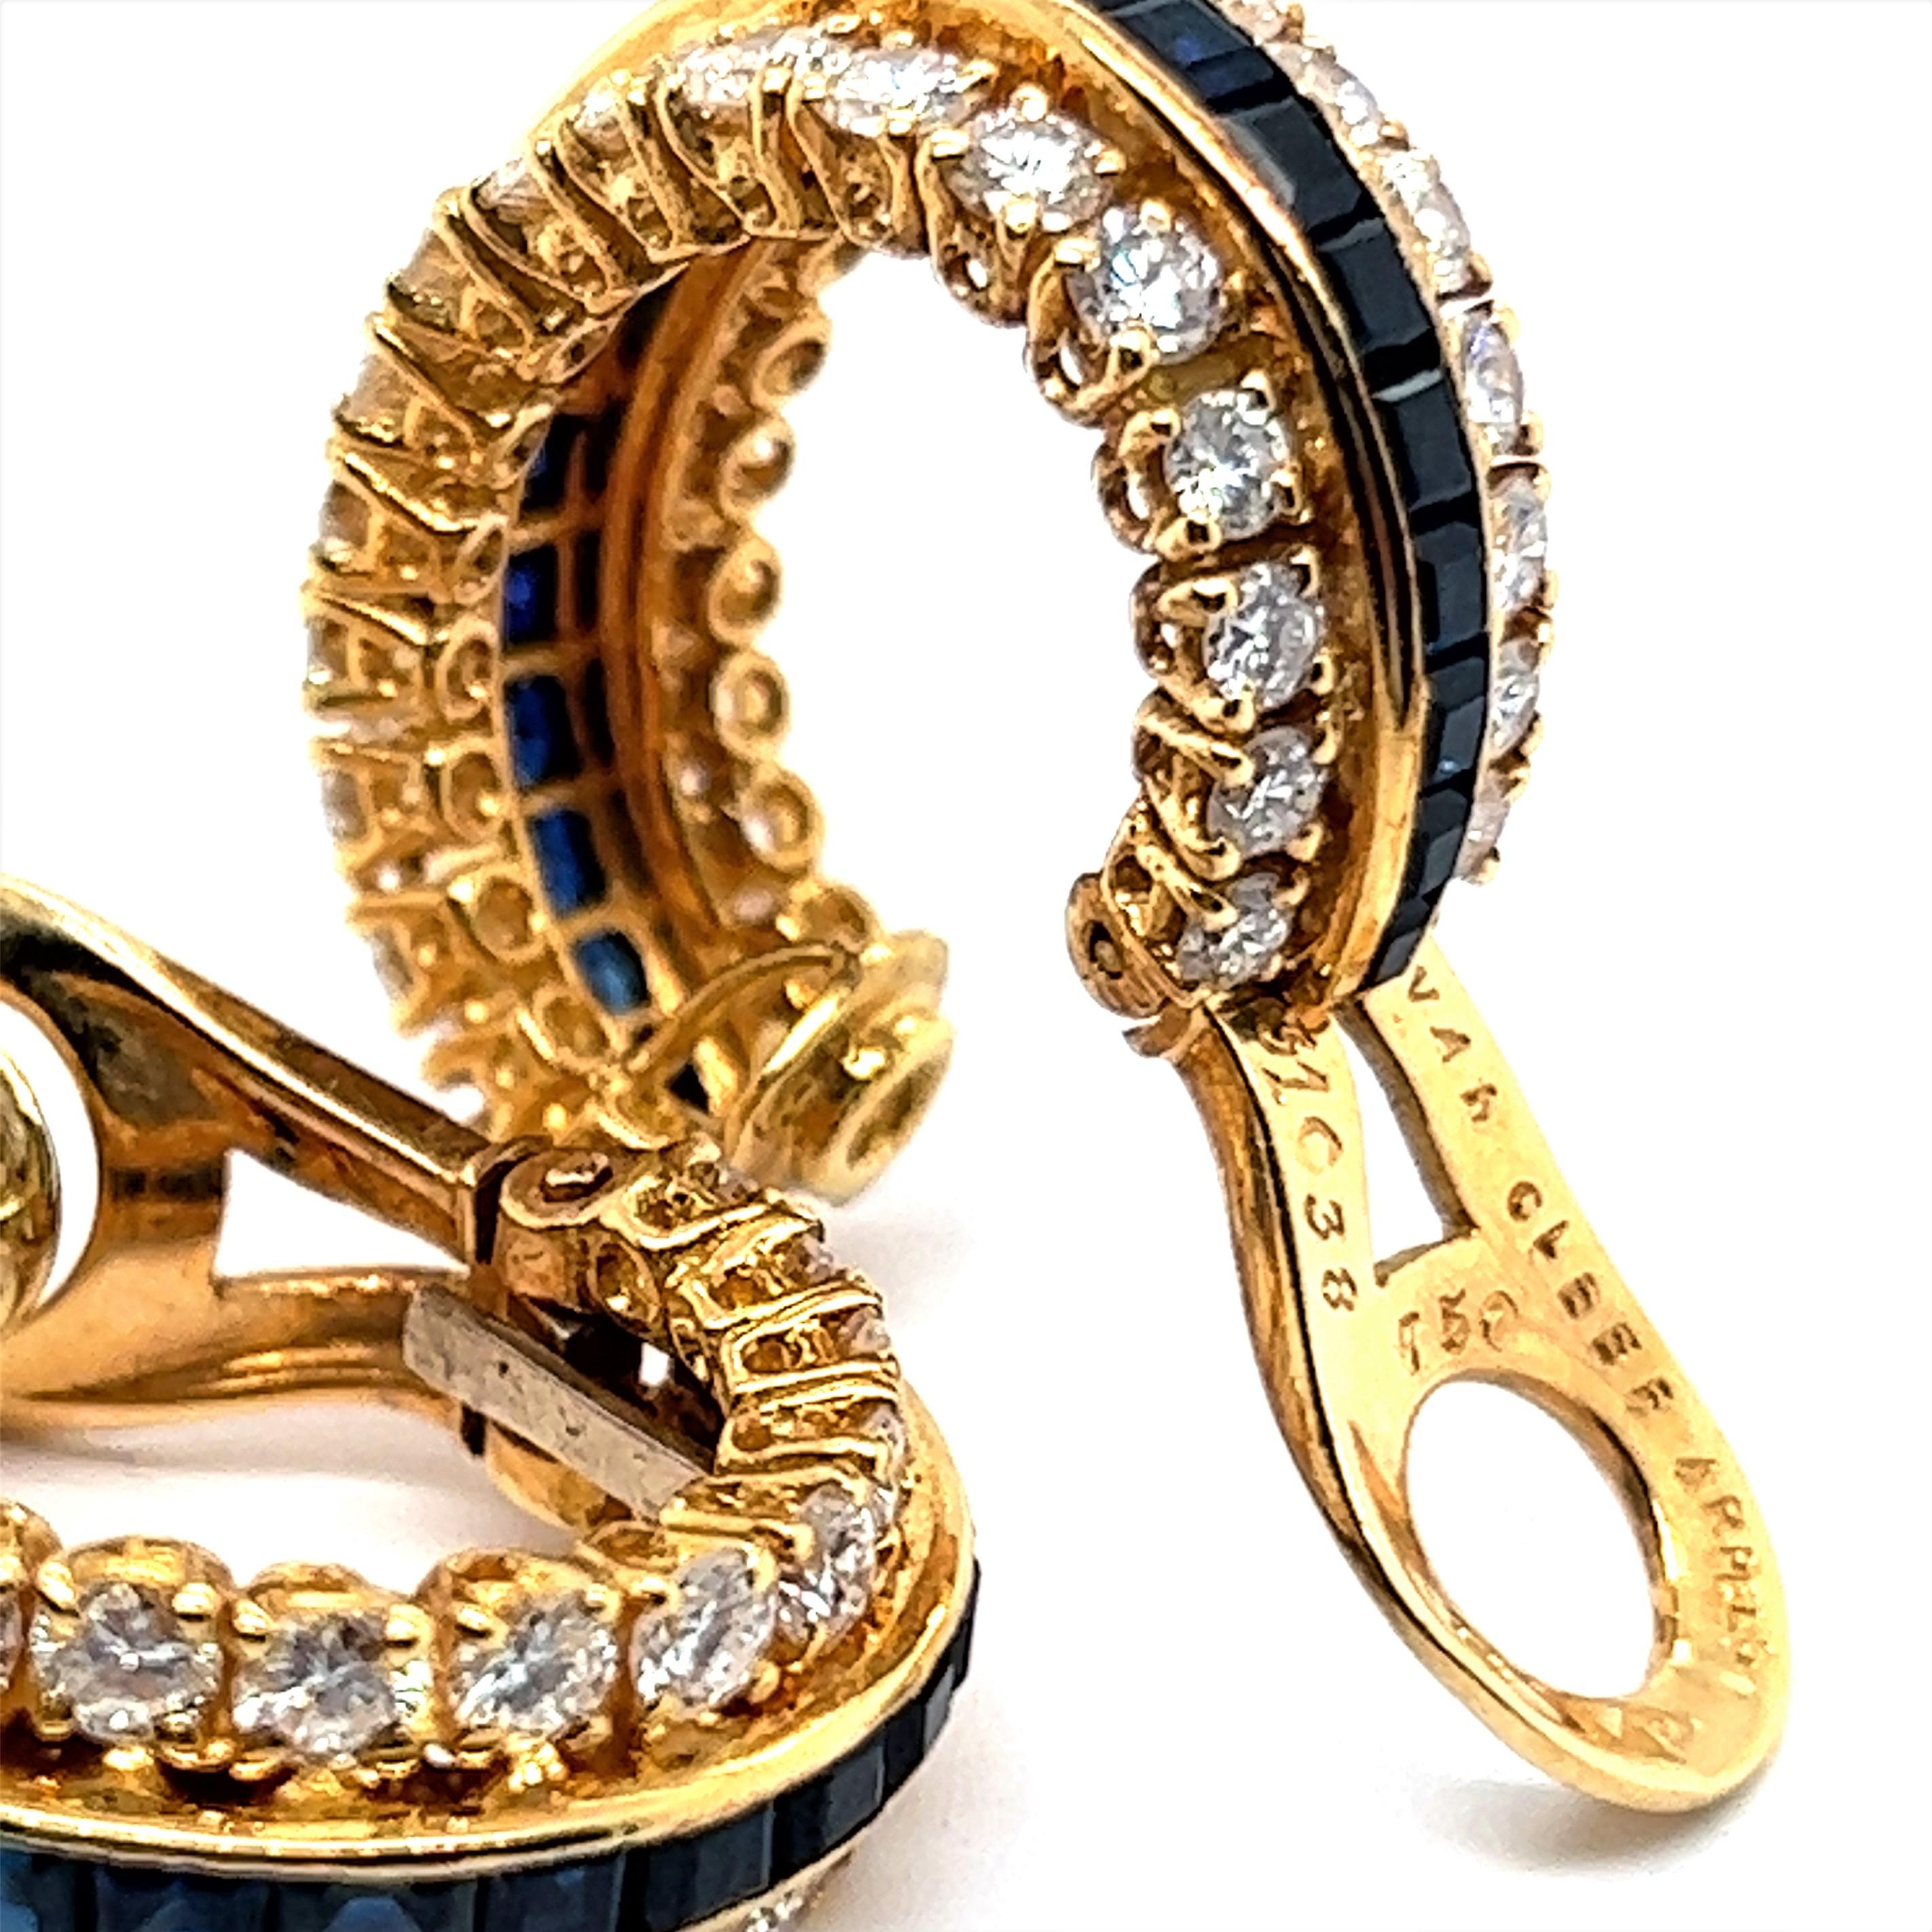 Elegant Van Cleef & Arpels Earclips in 18K Gold with Sapphires and Diamonds 4